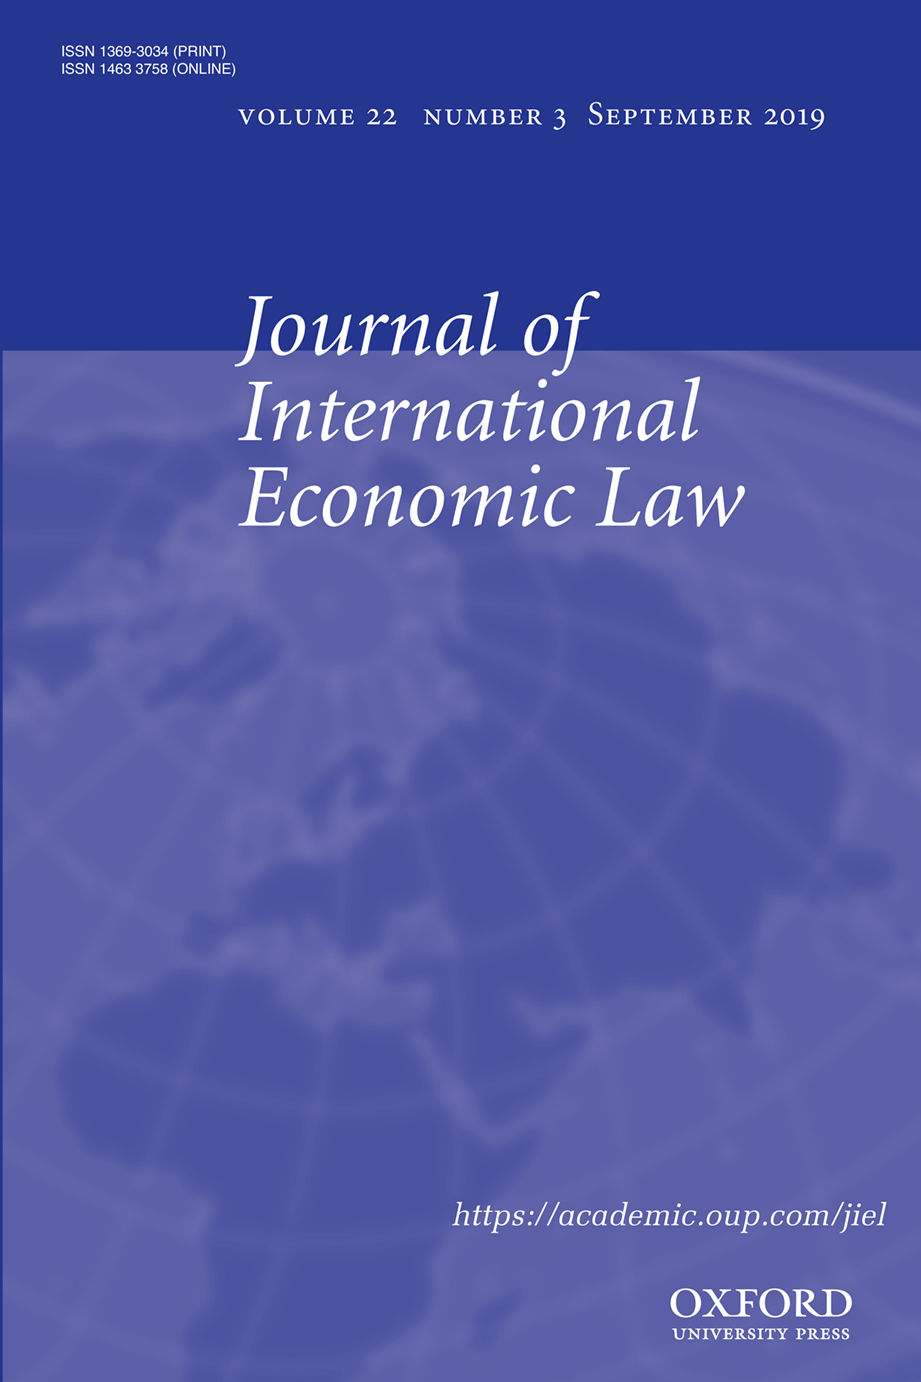 Journal of International Economic Law - Volume 22, Issue 3, September 2019 - dipublico.org